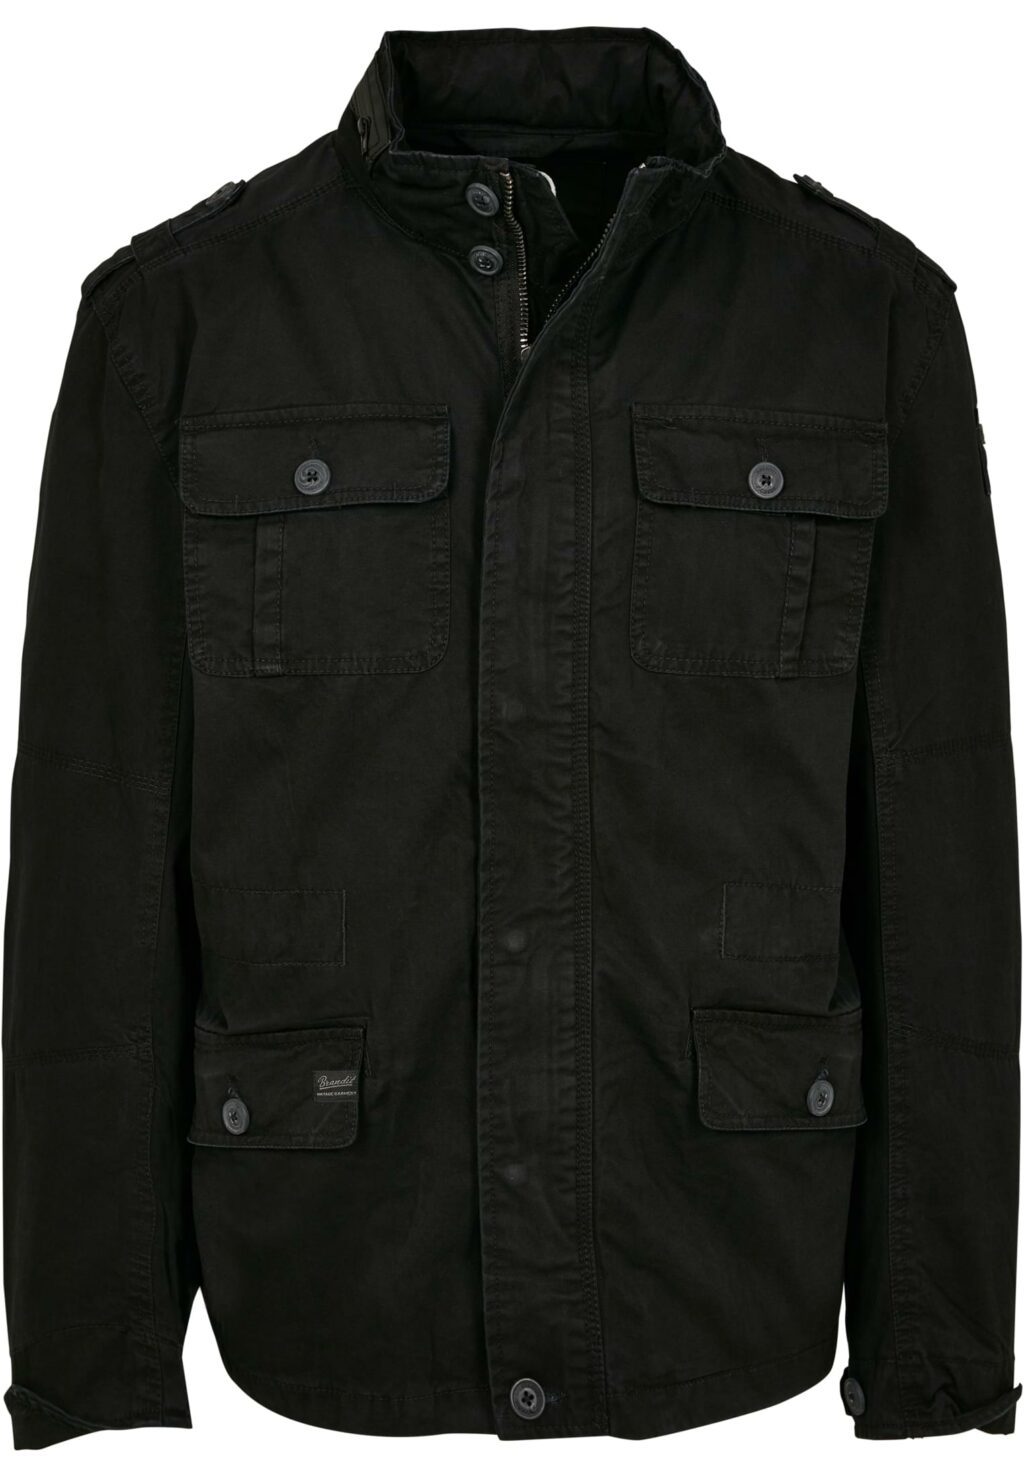 Brandit Britannia Jacket black BD3116